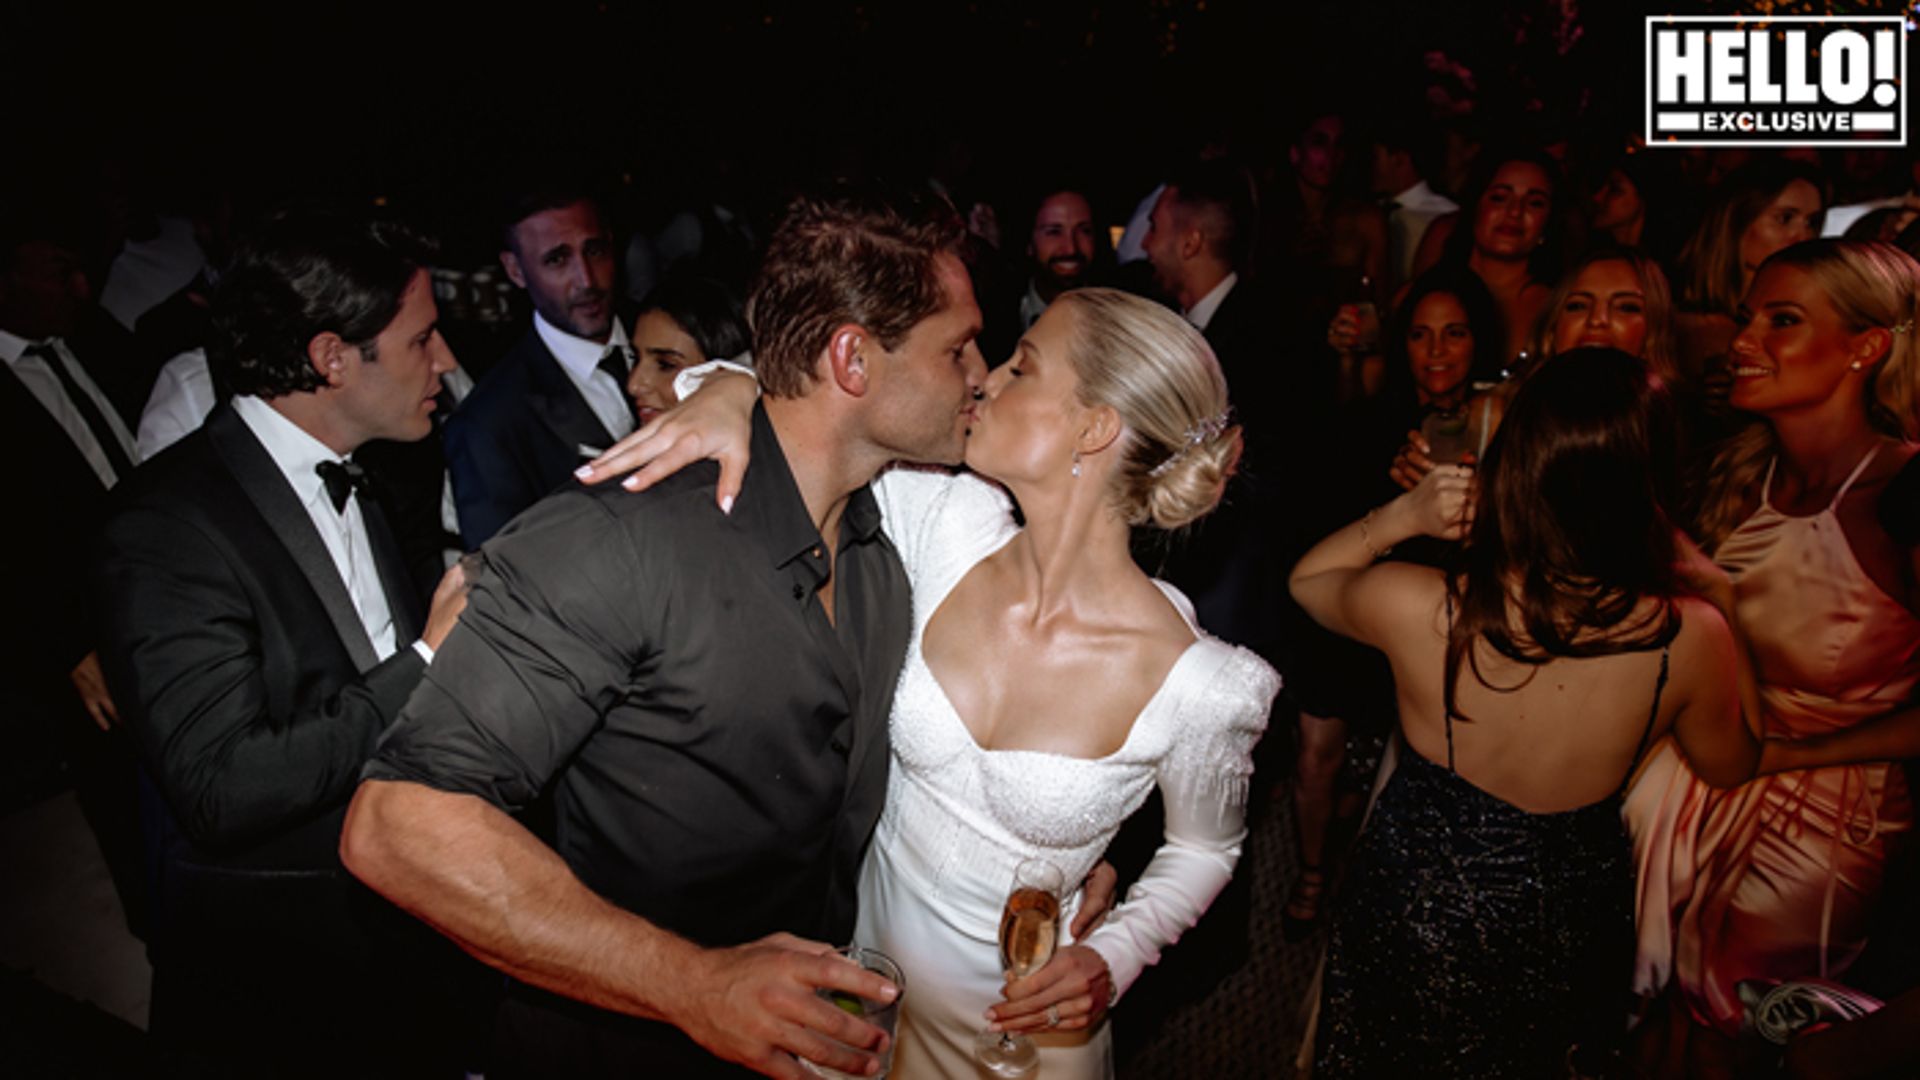 Lady Amelia Spencer kissing her new husband Greg Mallett on the dance floor at her wedding